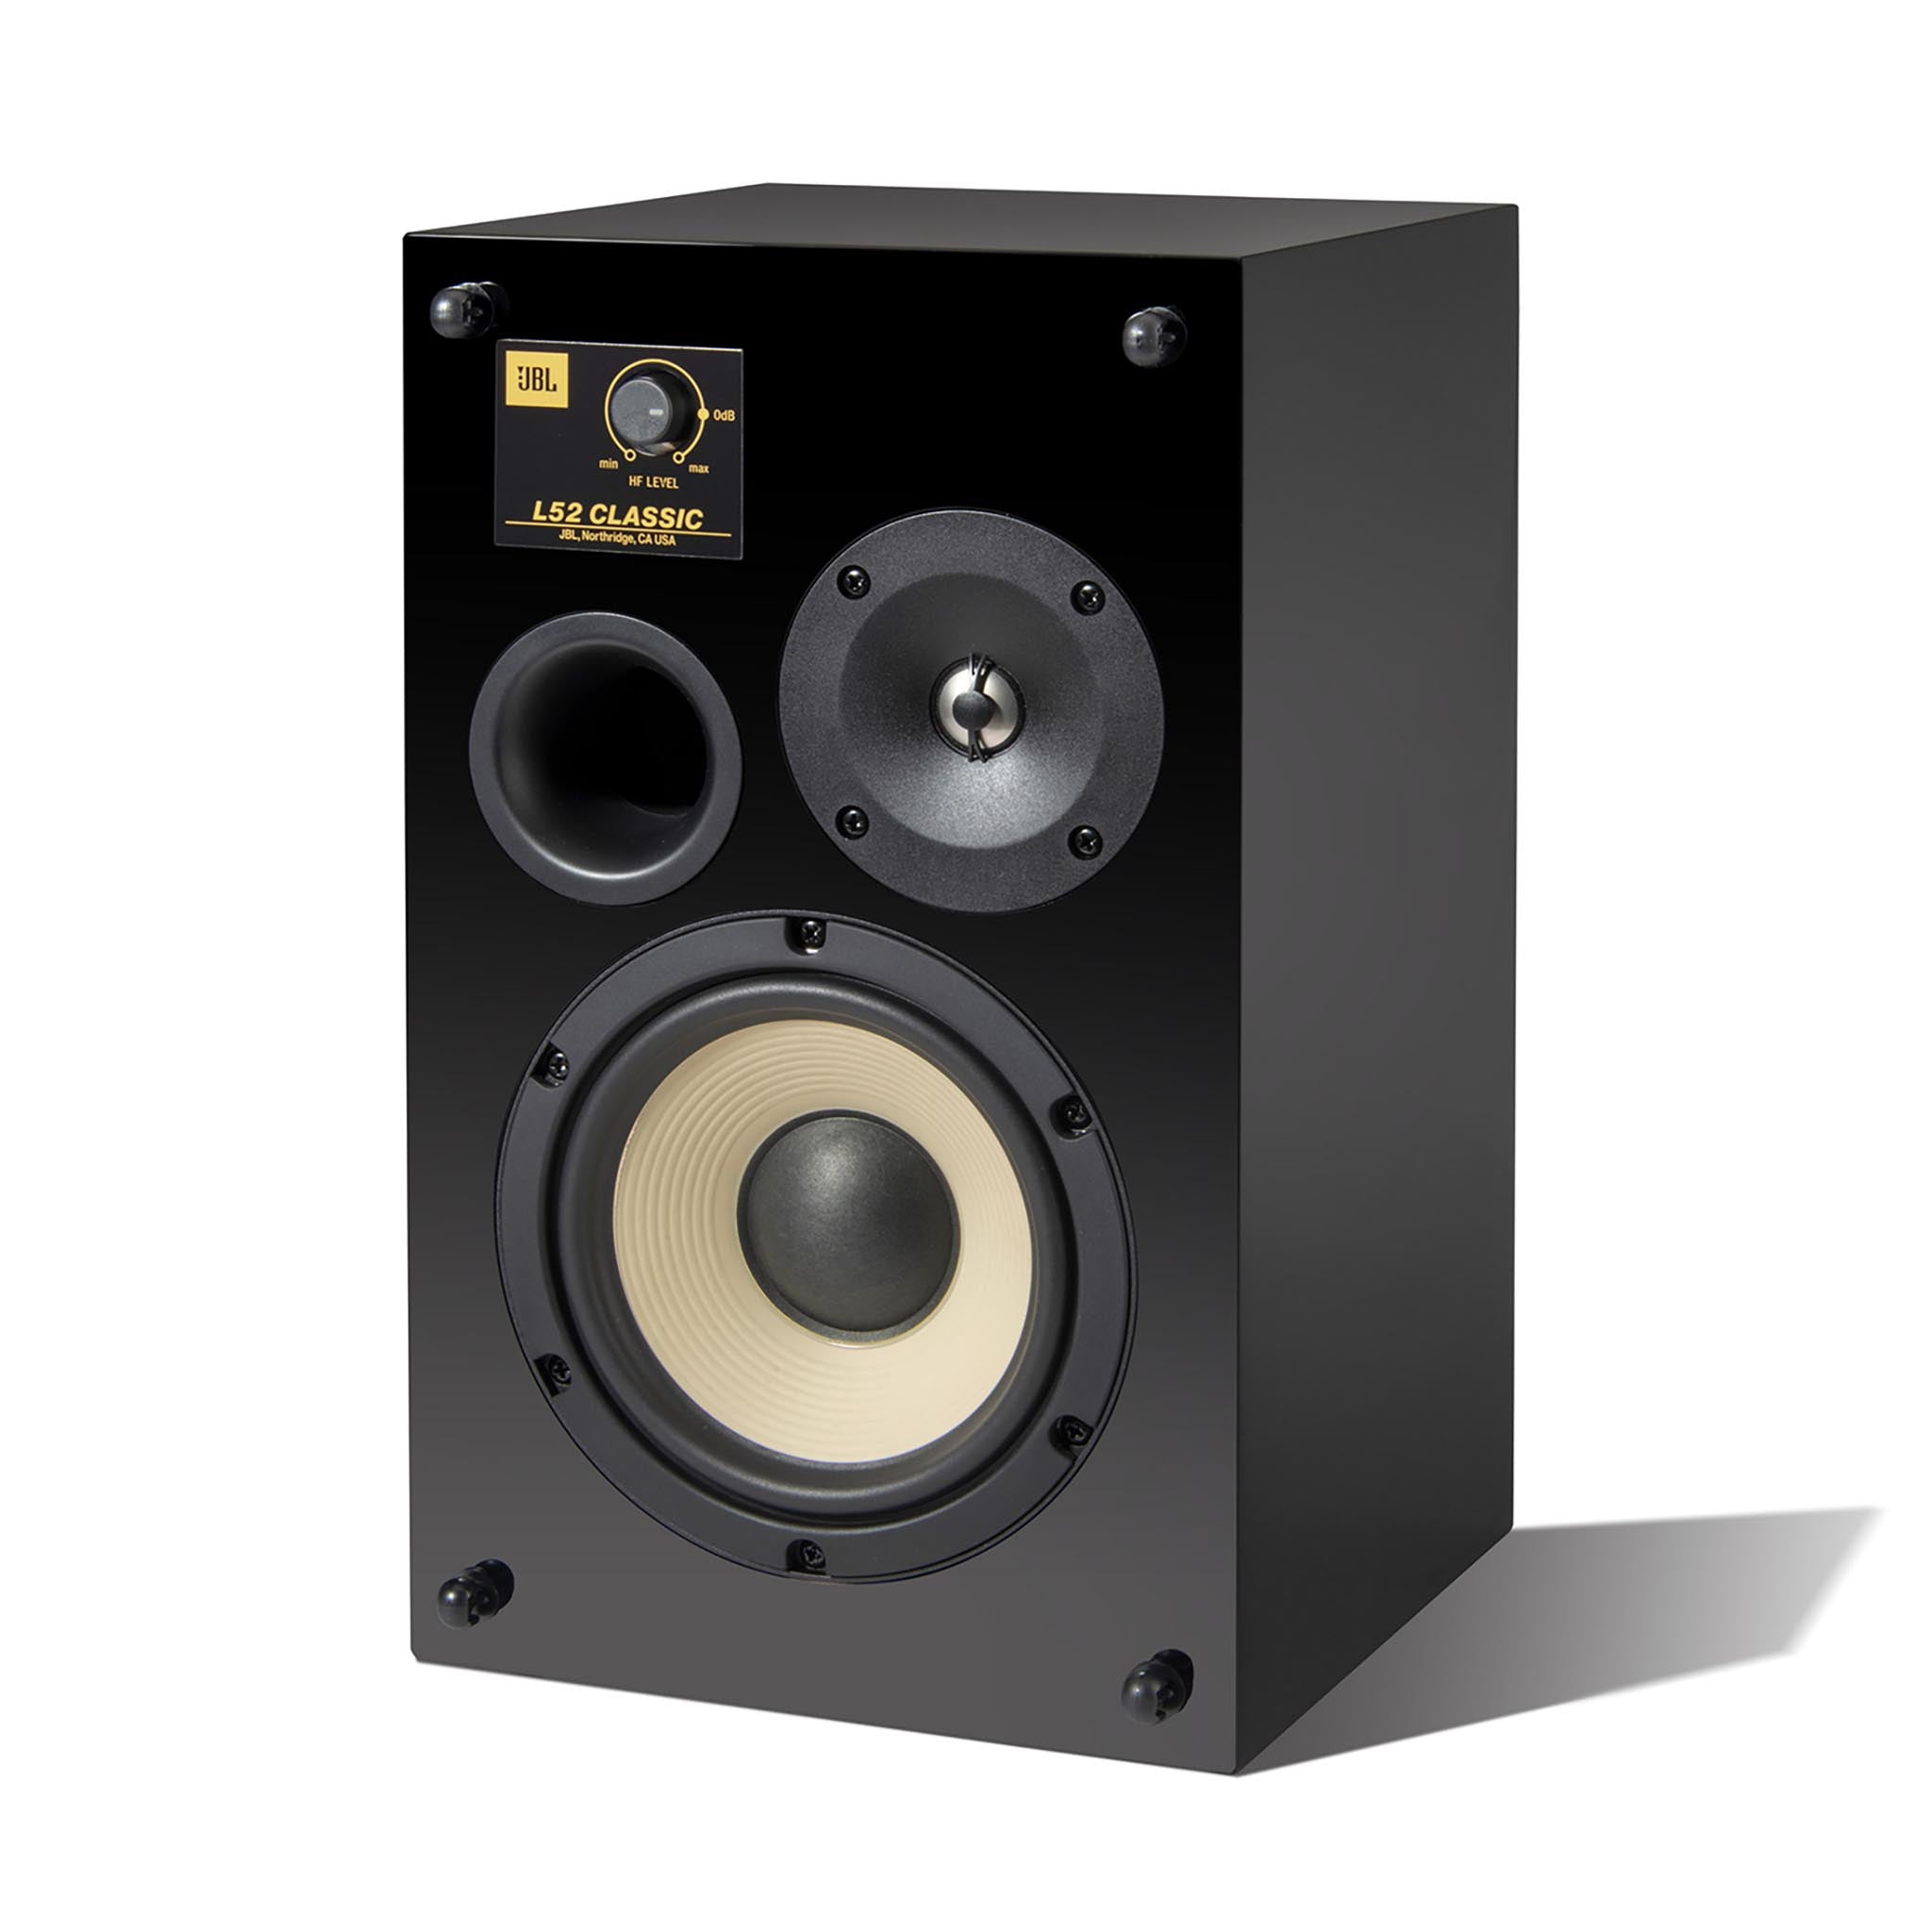 JBL L52 Classic Black Limited Edition Loudspeaker (pair) – Upscale 